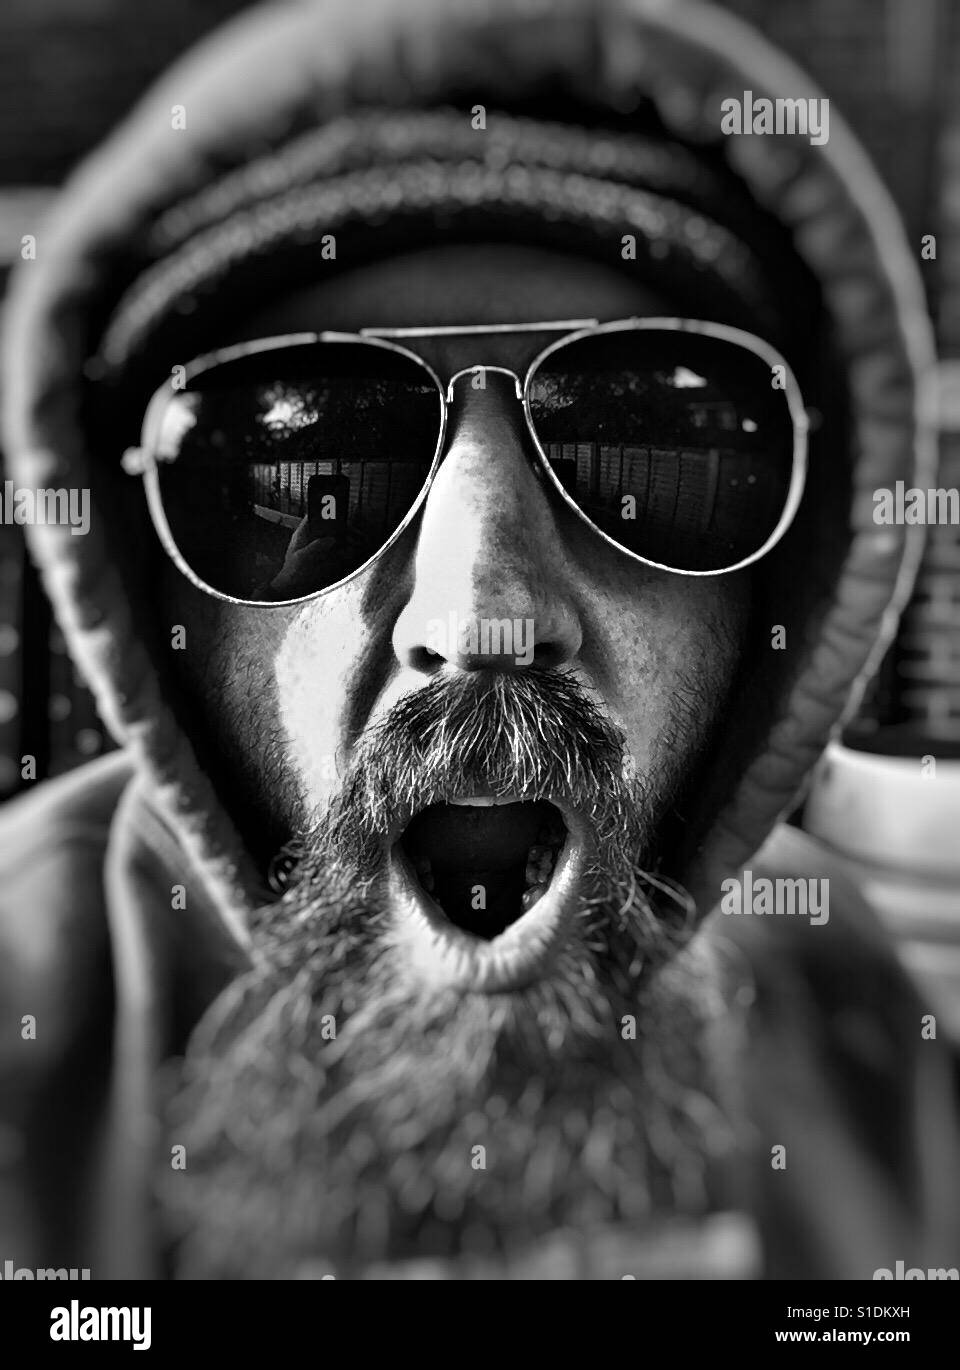 Man with beard wearing Sunglasses Stock Photo